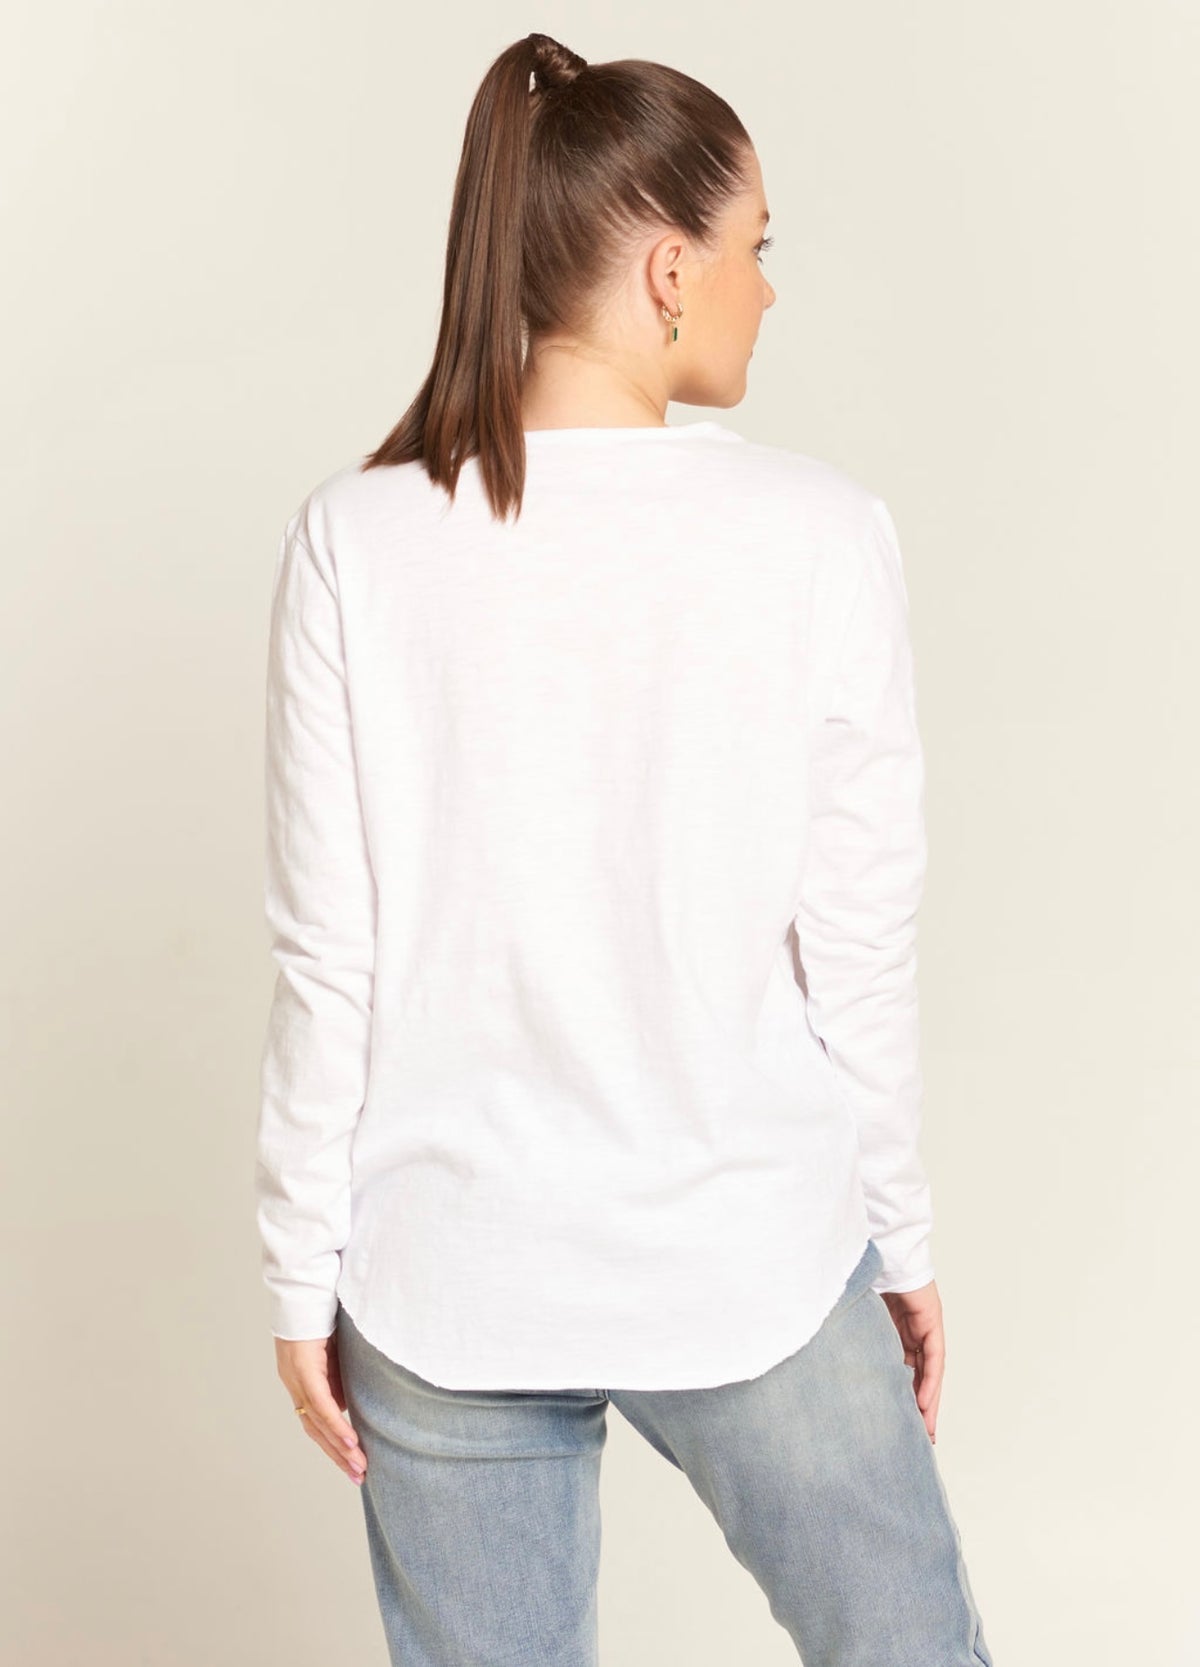 Cloth Paper Scissors white long sleeve t-shirt 1338